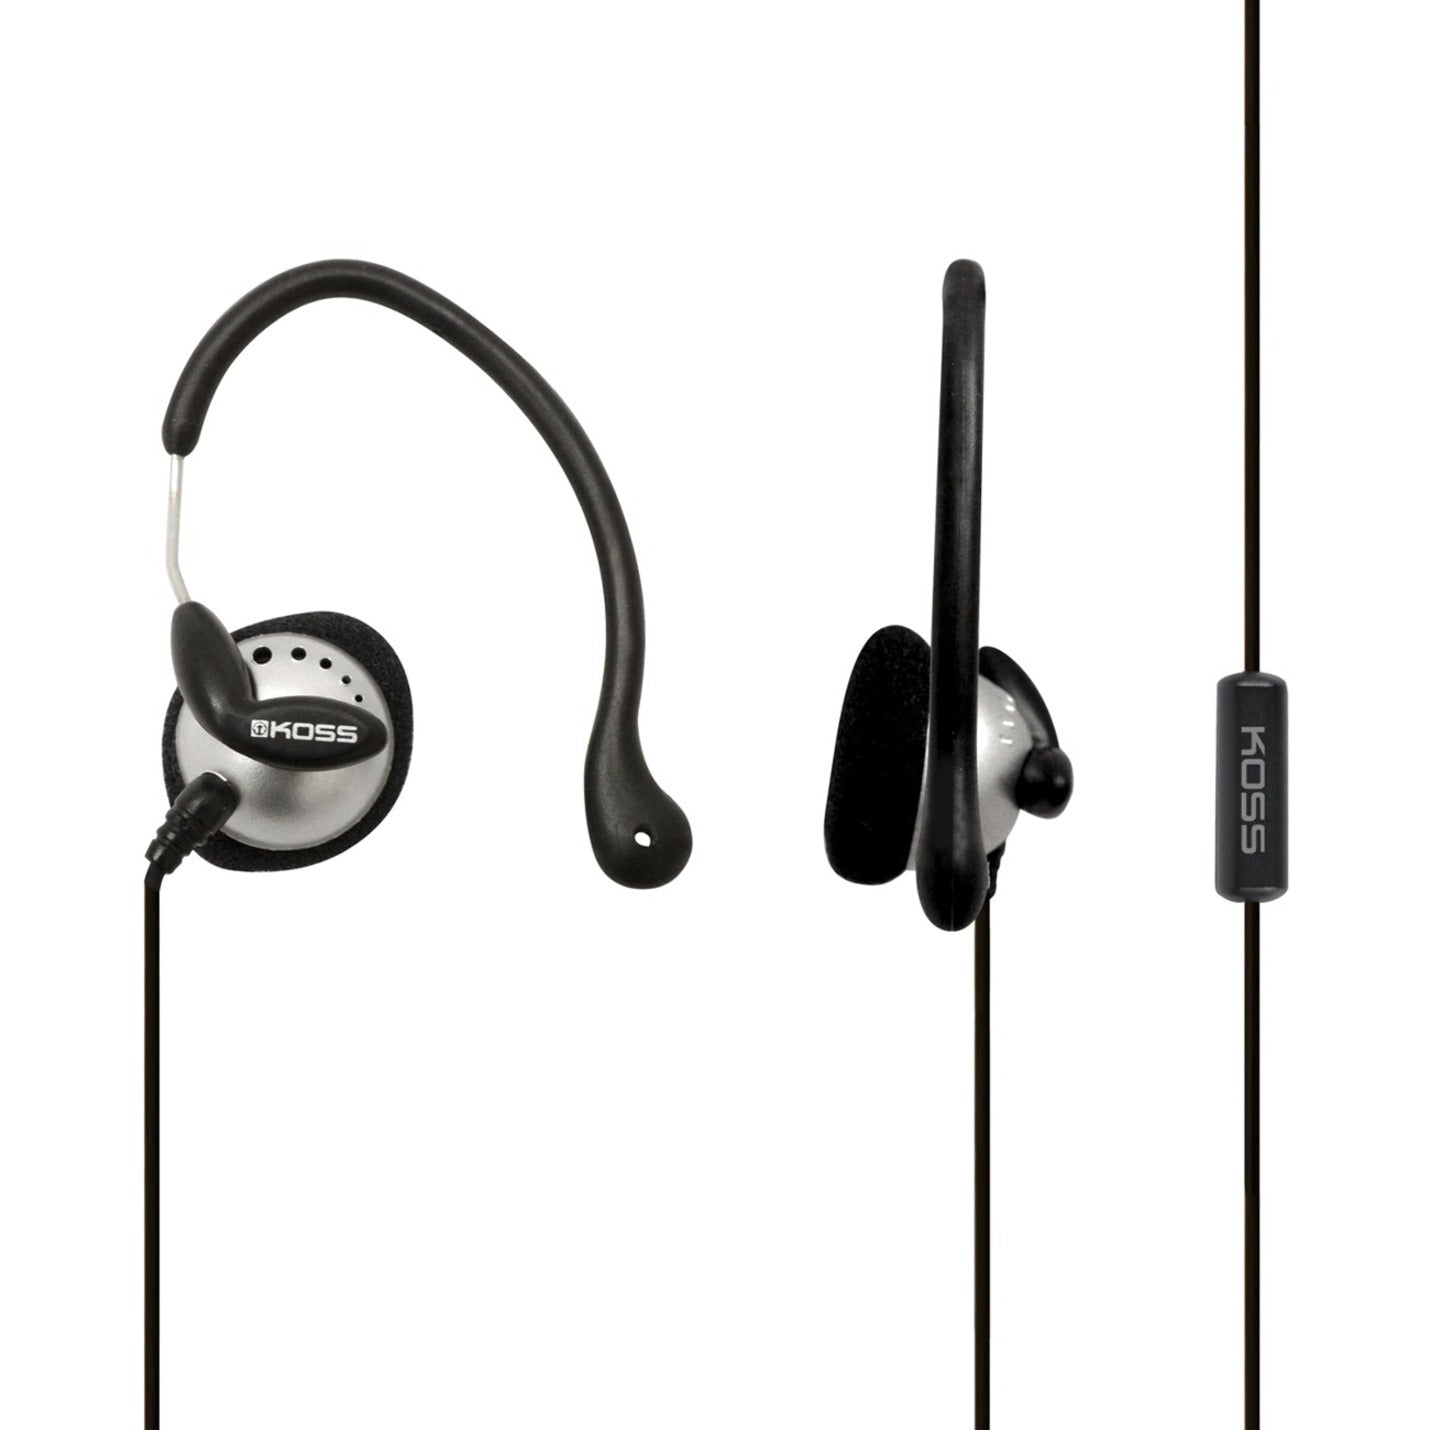 Koss KSC22I KSC22i Ear Clip, Binaural Over-the-ear Earbud Earset, Lifetime Warranty, On-cable Microphone, China Origin